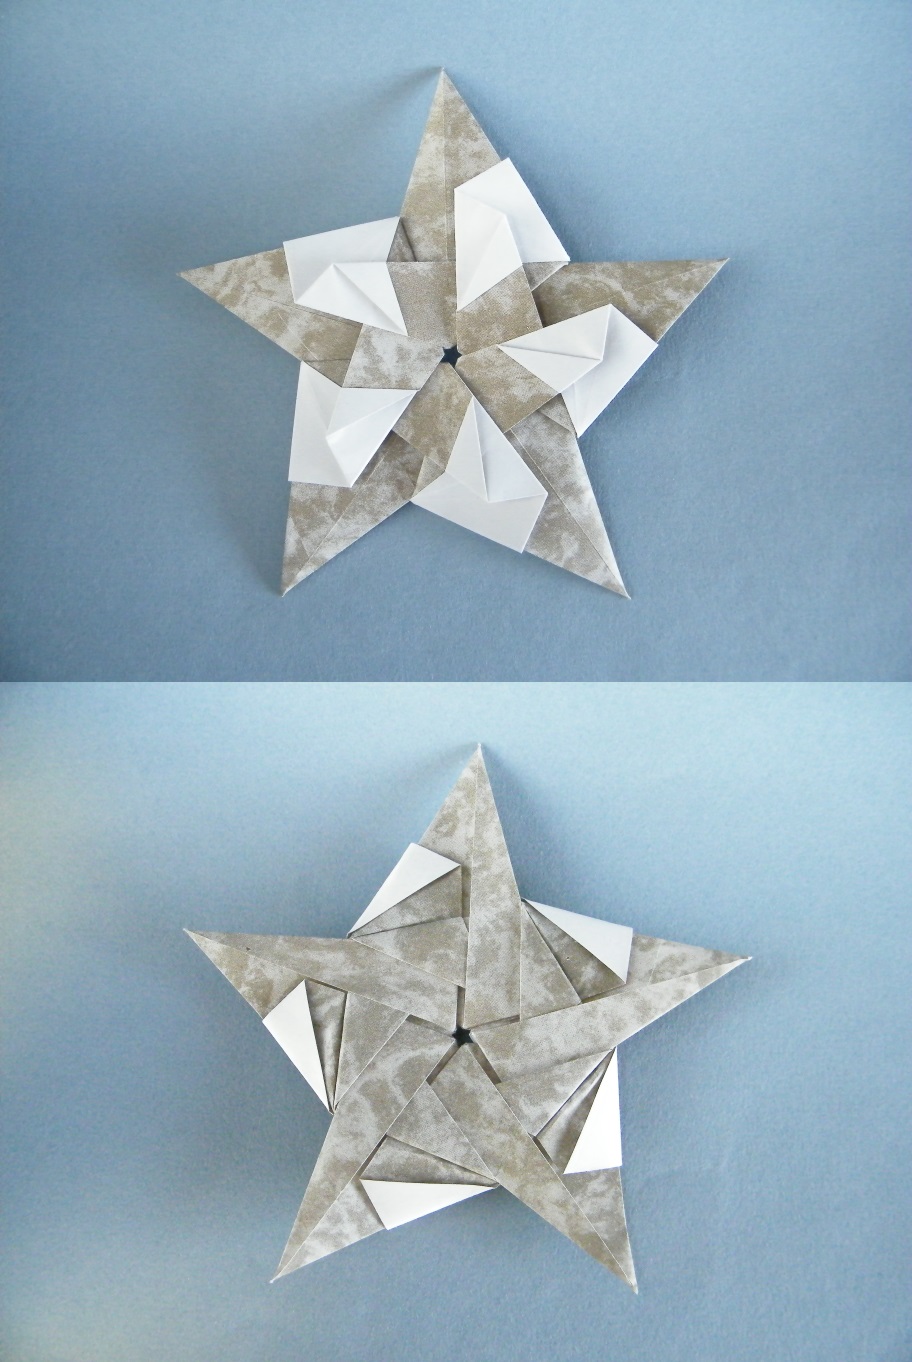 Origami Tommelise star by Natalia Romanenko on giladorigami.com